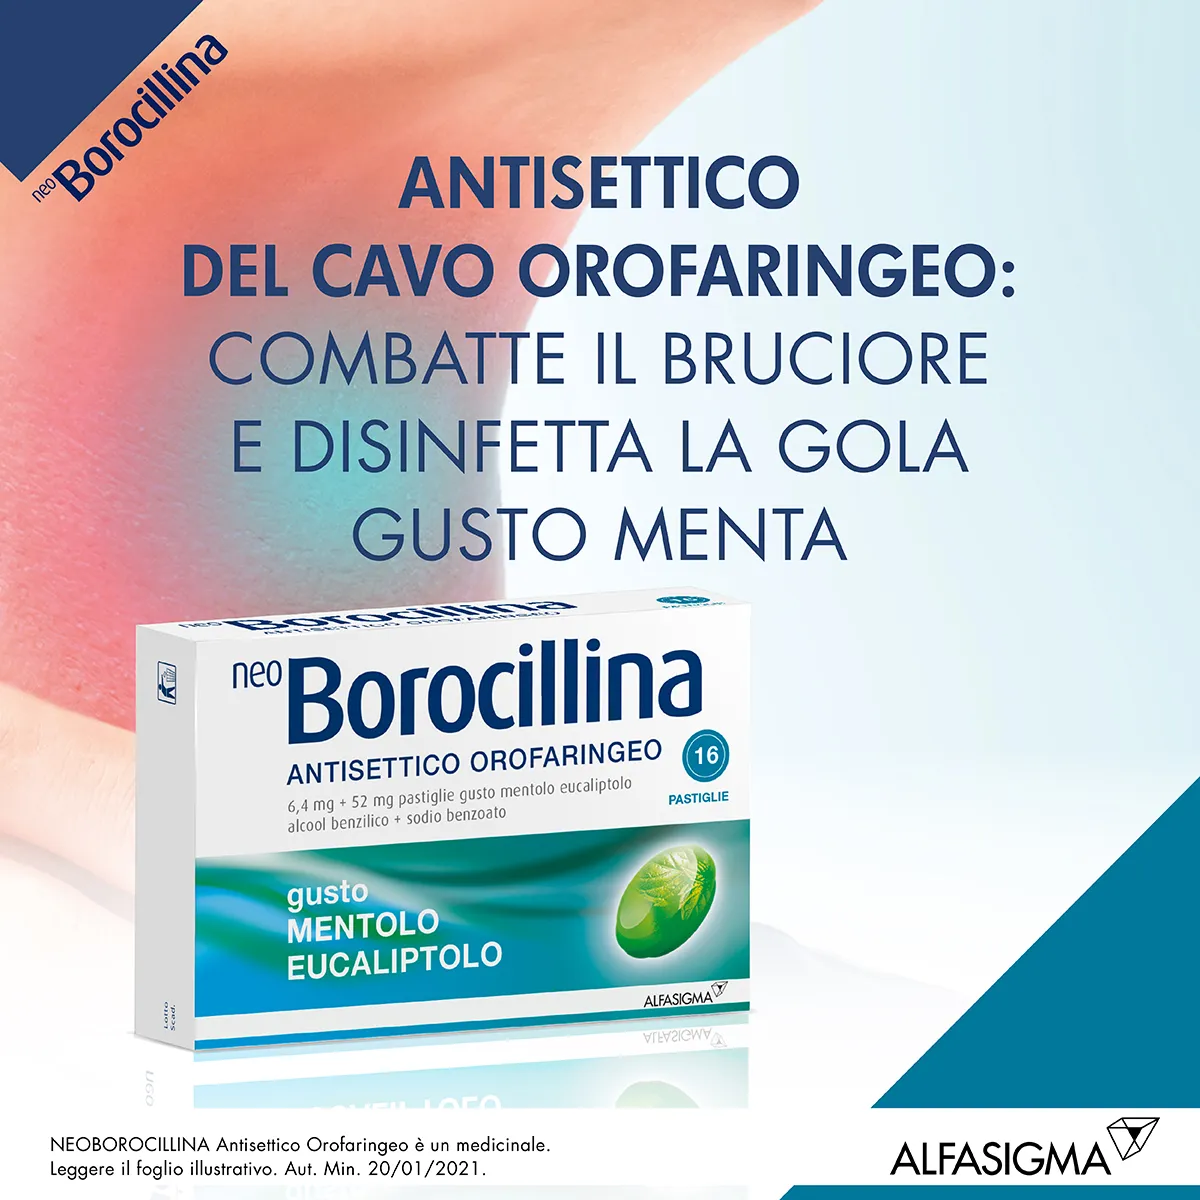 Neo Borocillina 6,4+52 mg Gusto Mentolo Eucaliptolo 16 Pastiglie Antisettico Orofaringeo